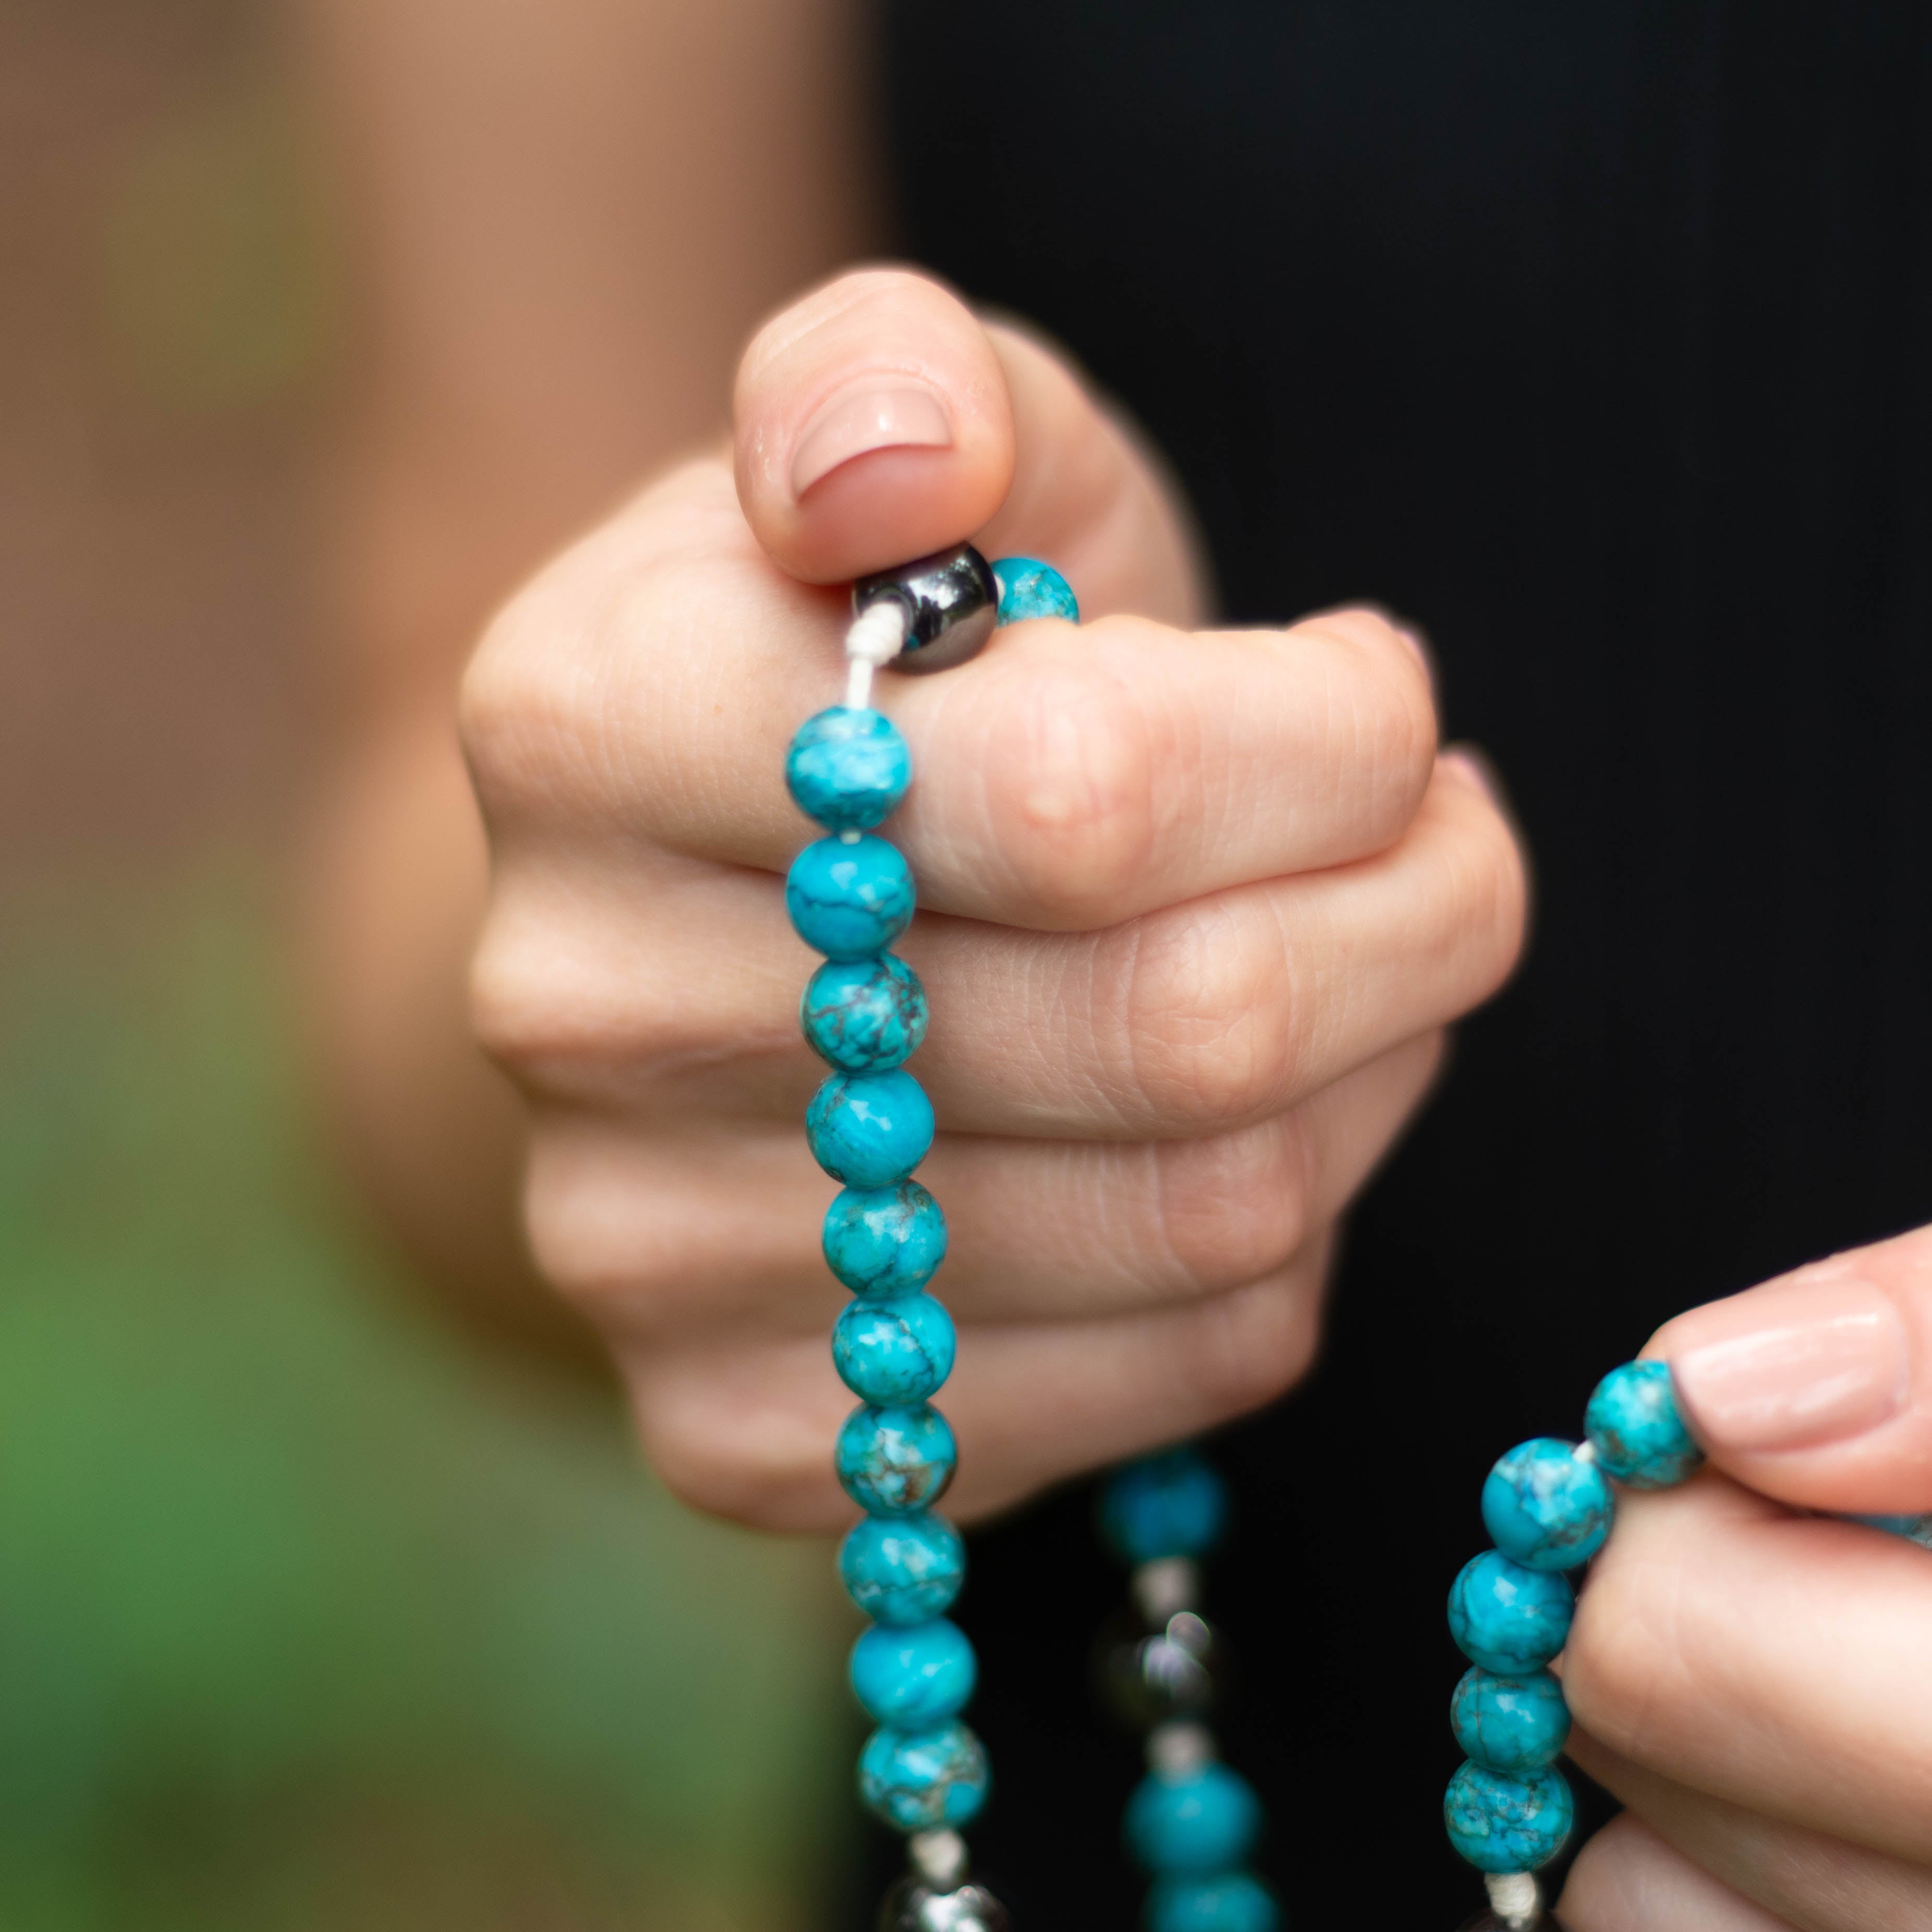 St. Kateri Handmade Rosary